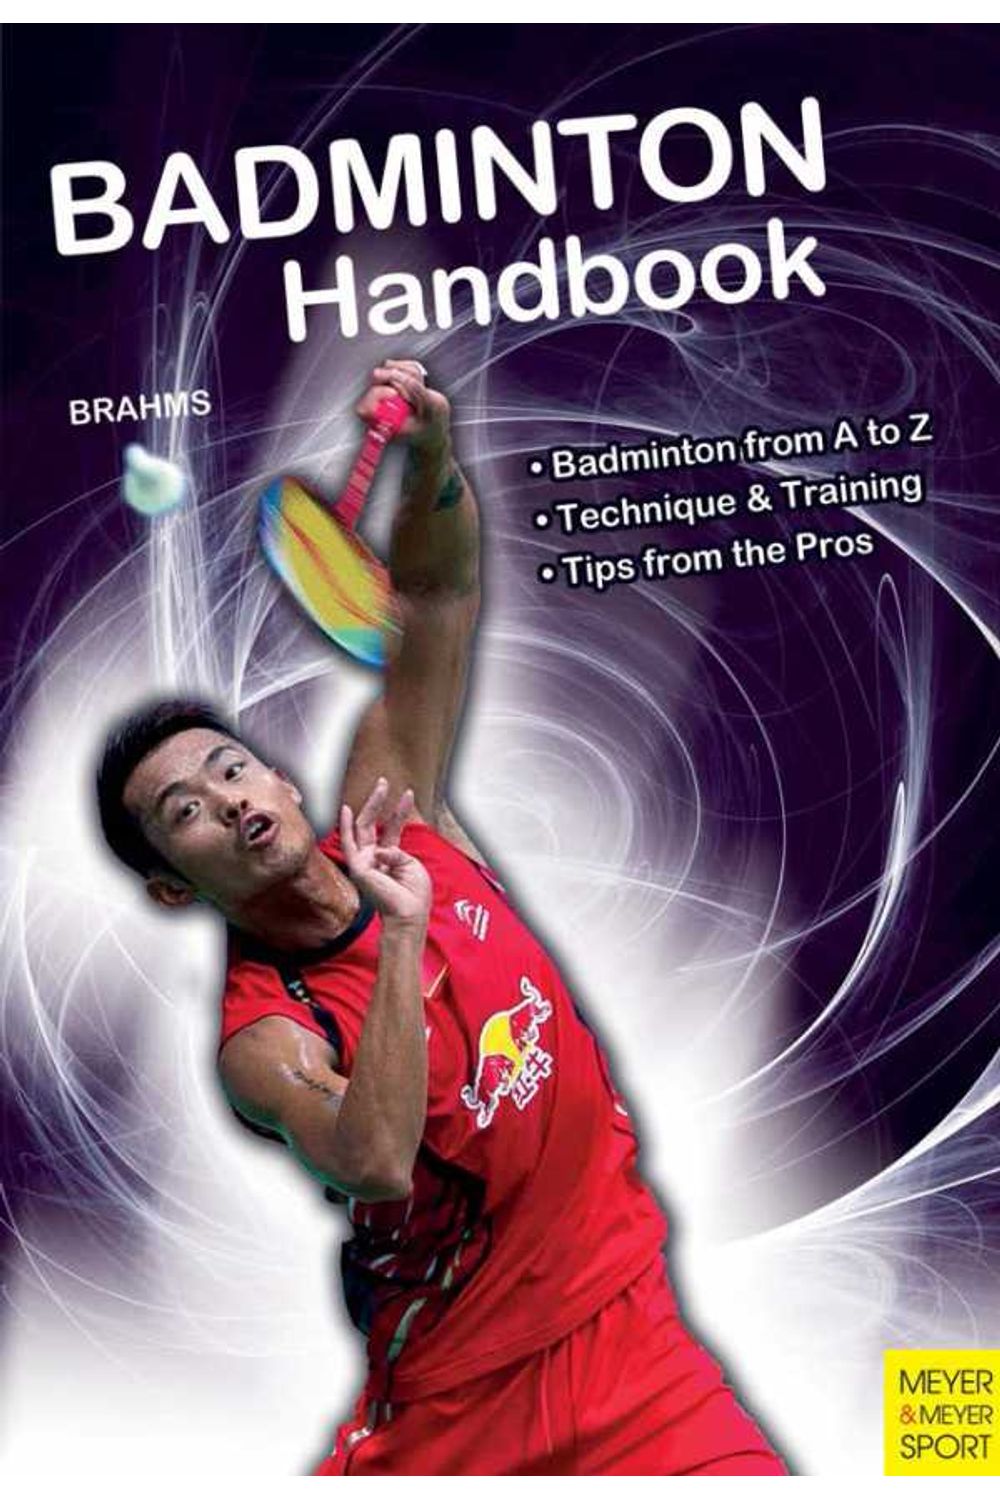 bw-badminton-handbook-meyer-meyer-sport-9781782553540